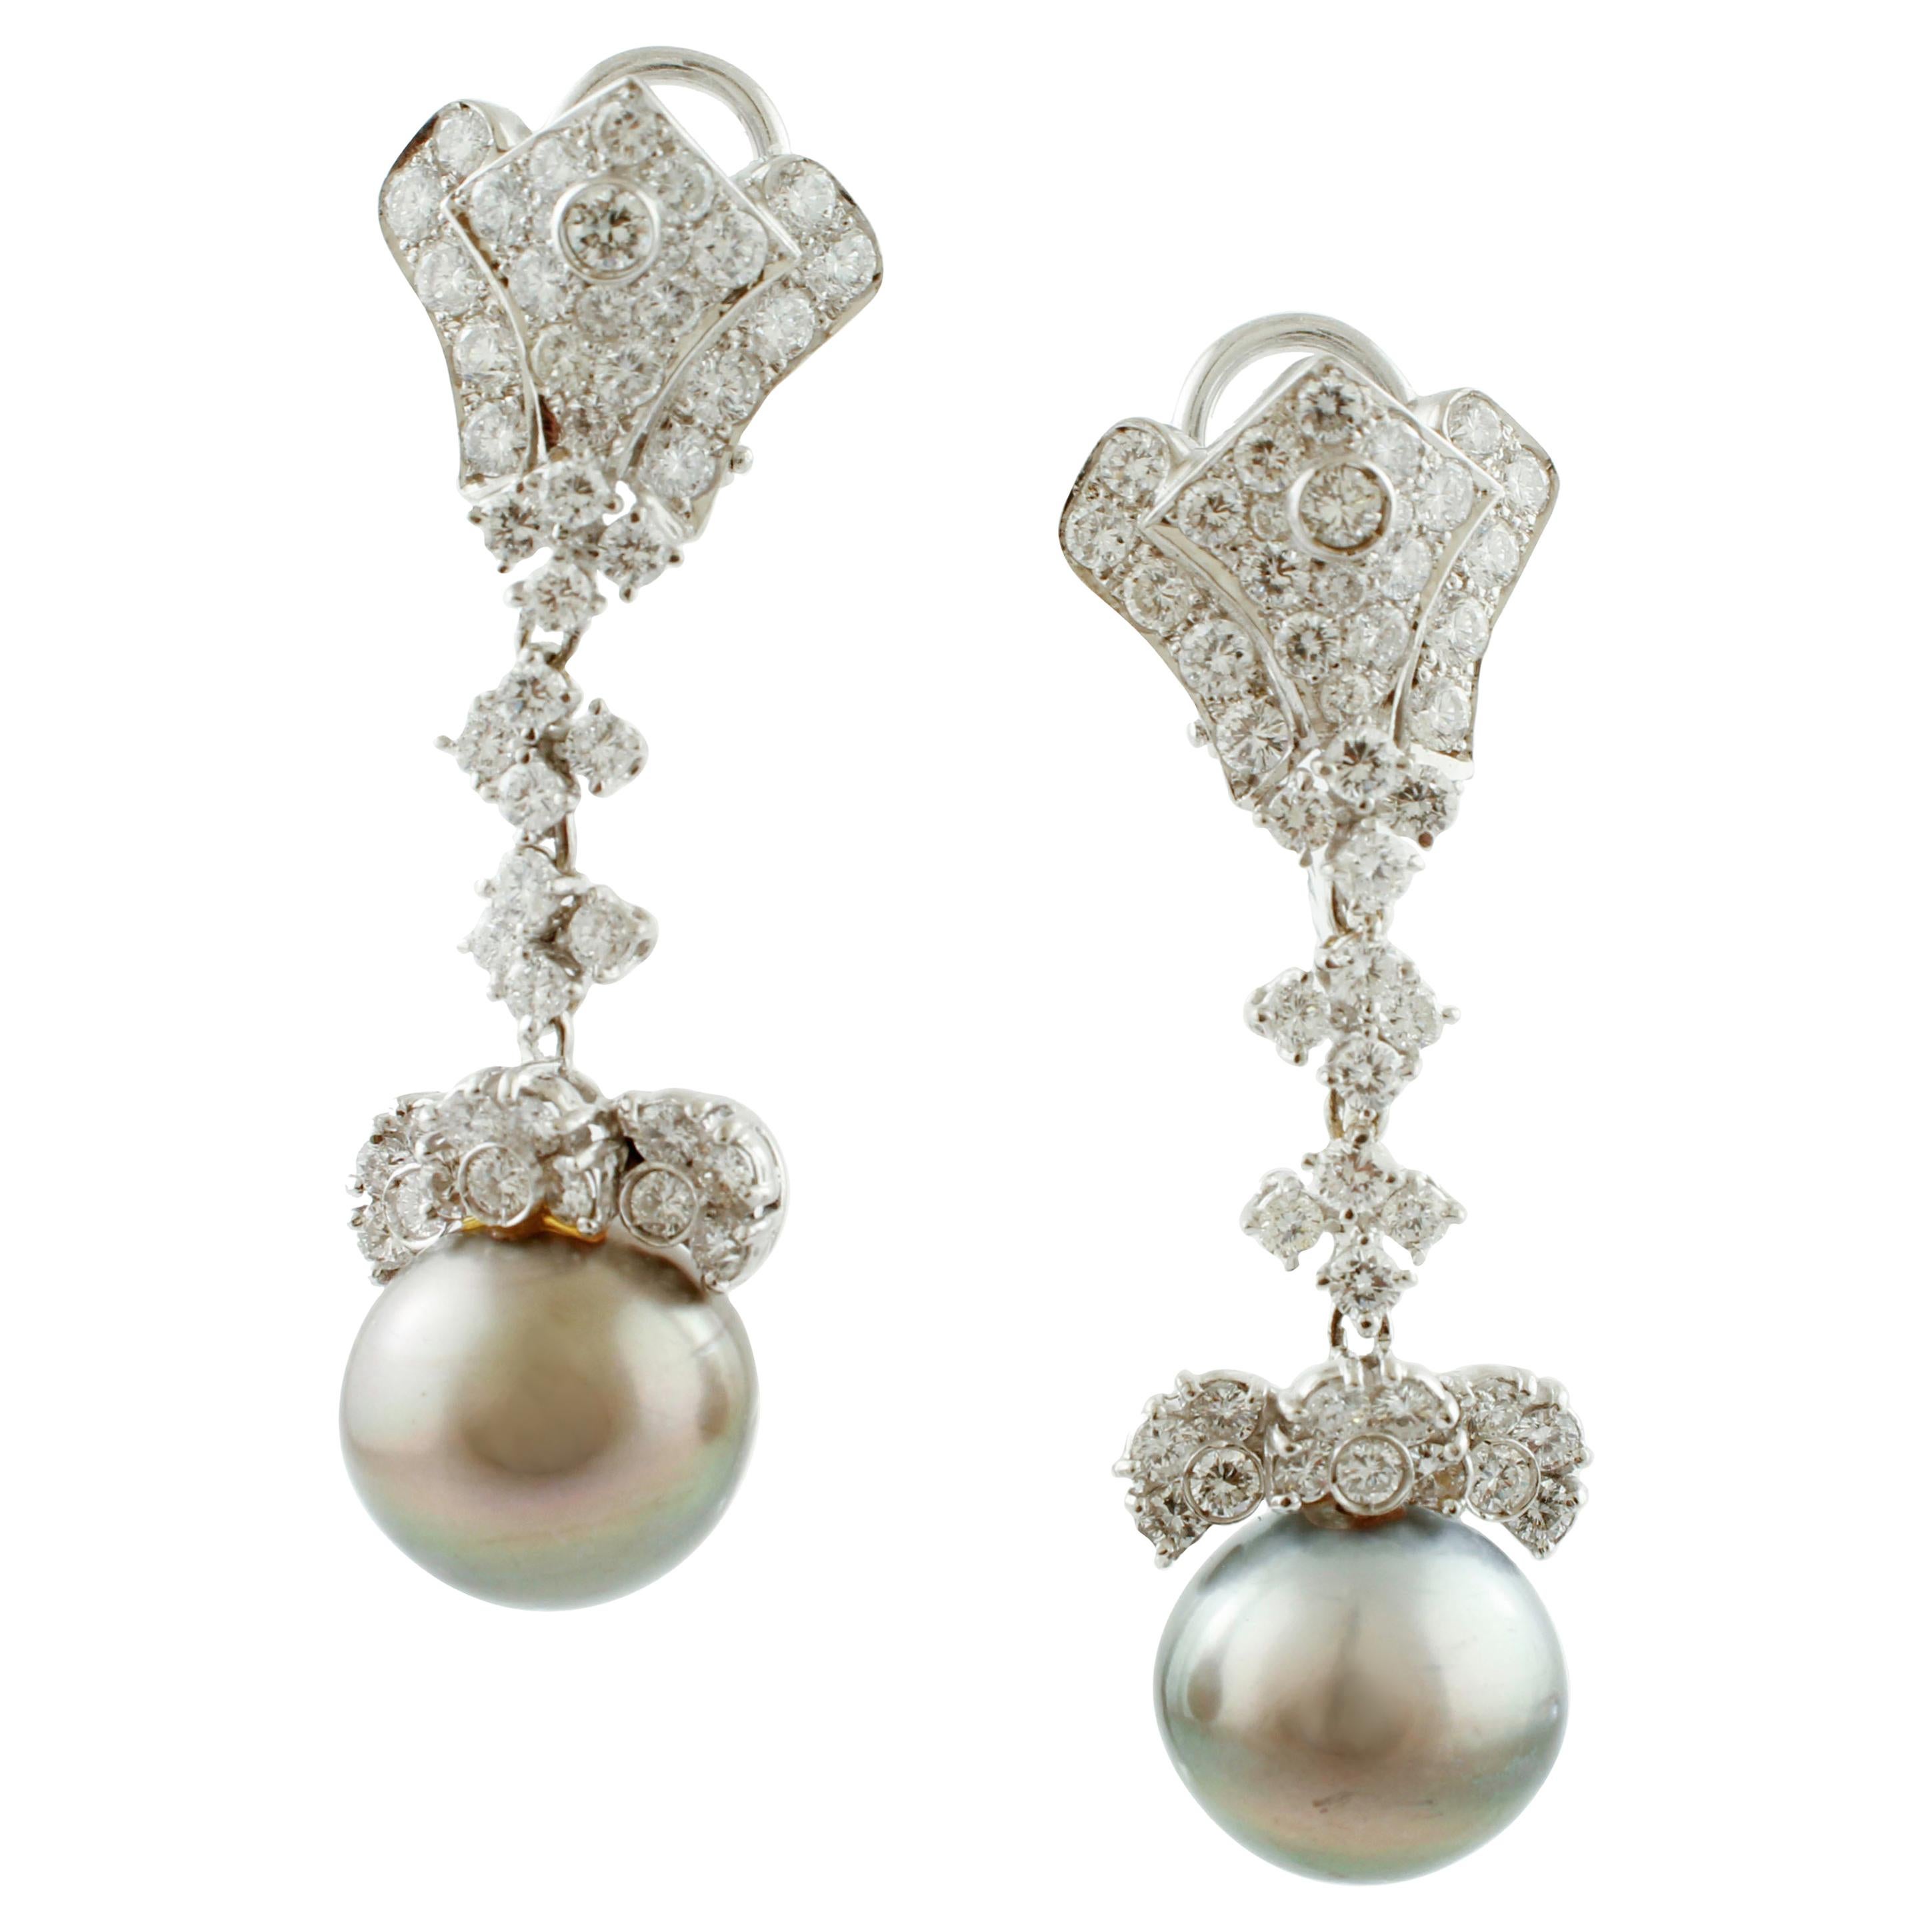 White Diamonds, 40 Carat South Sea Pearls, 18 Karat Gold Clip-On/Drop Earrings